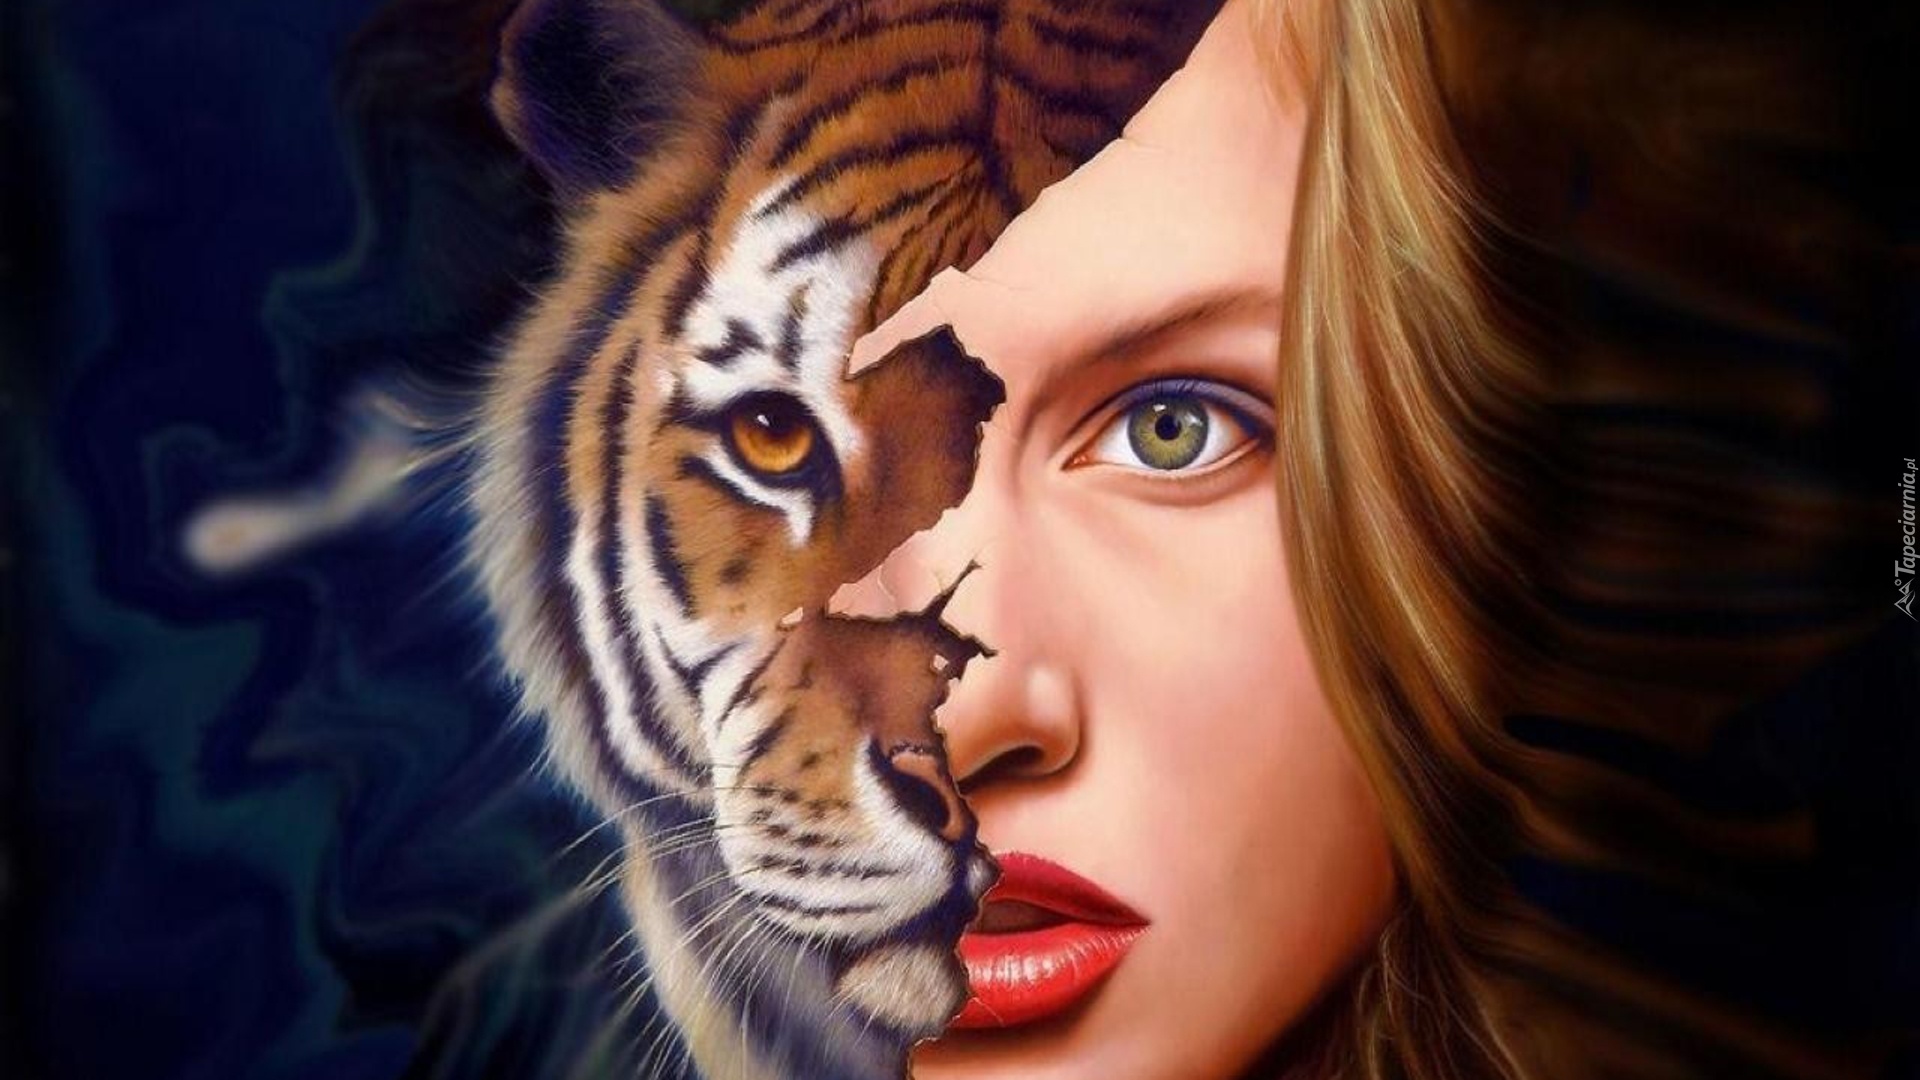 Мужчина коза женщина тигр. Тигр и девушка. Девушка тигрица. Девушка тигрица красивая. Девушка с лицом тигра.